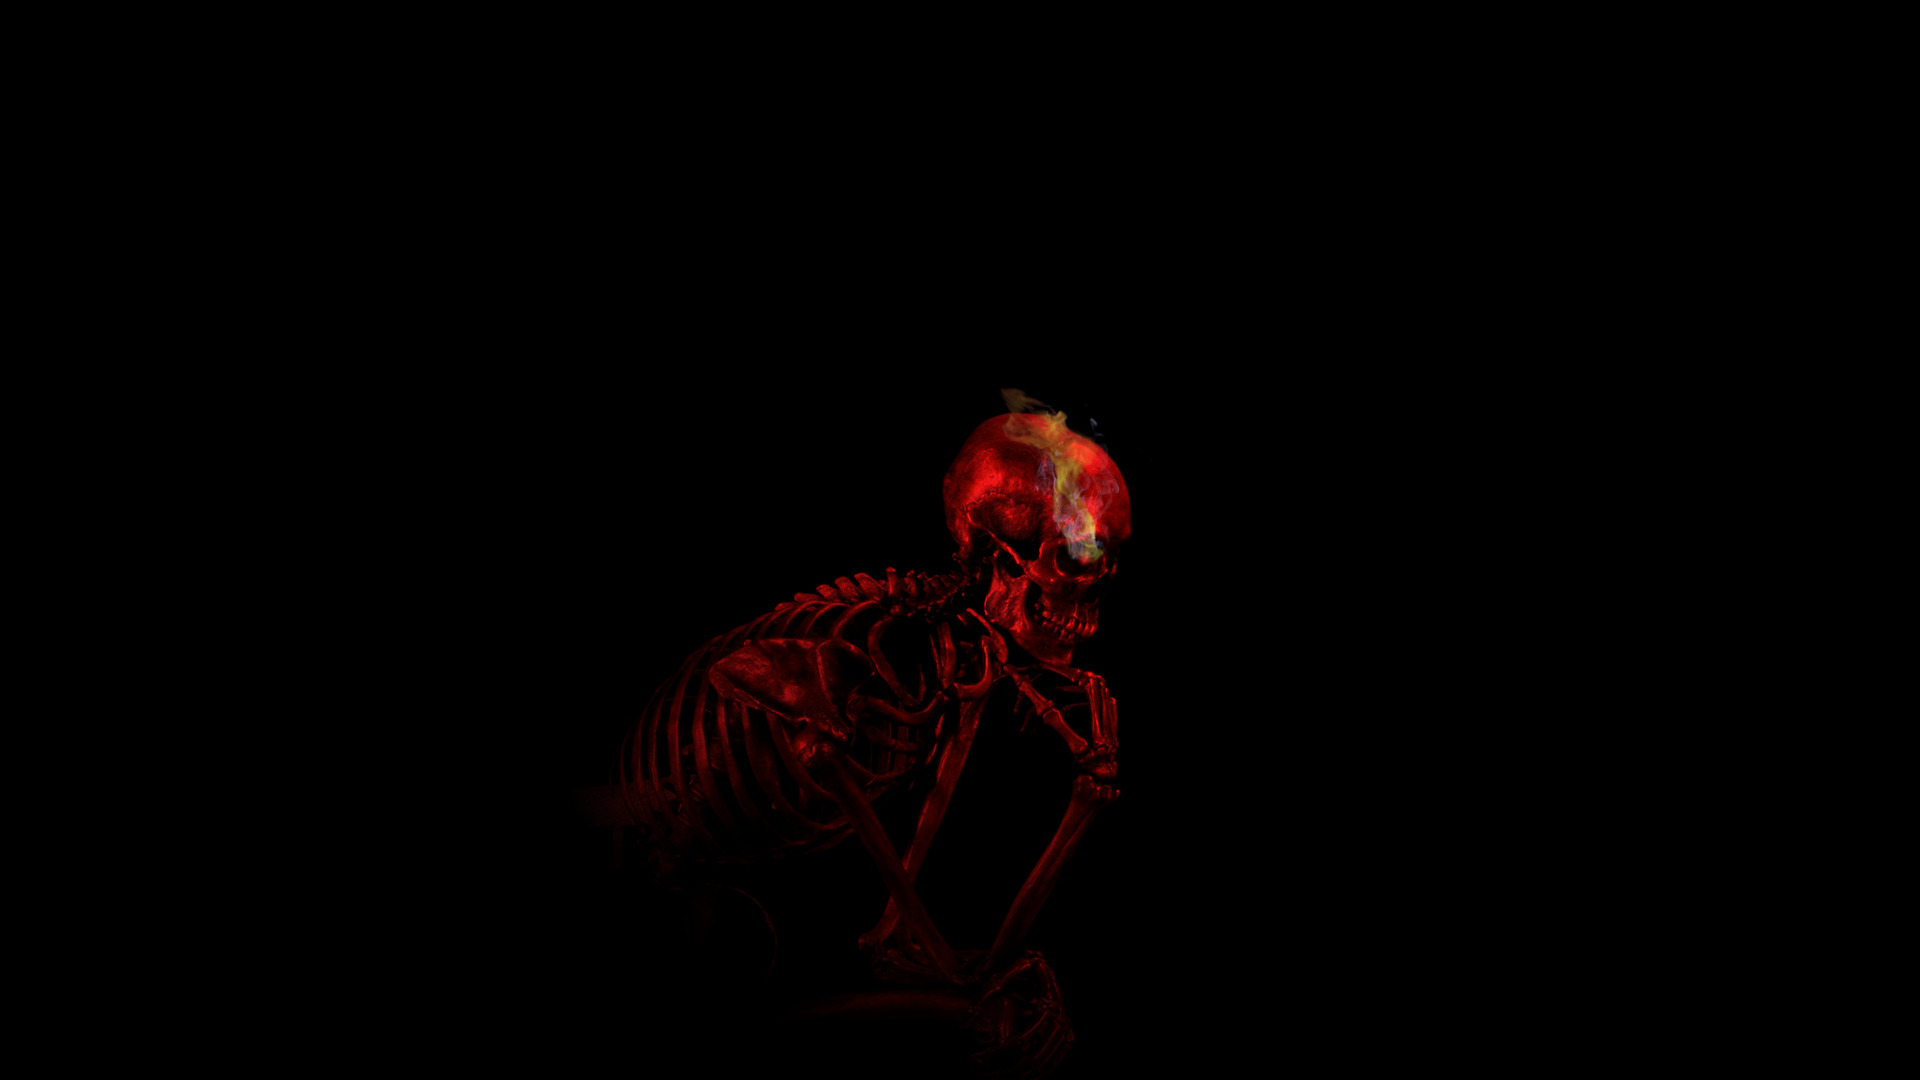 1920x1080 thinking ribs teeth auguste rodin digital art skull black background minimalism red skeleton smoke bones imagination wallpaper JPG 109 kB. Mocah HD Wallpaper